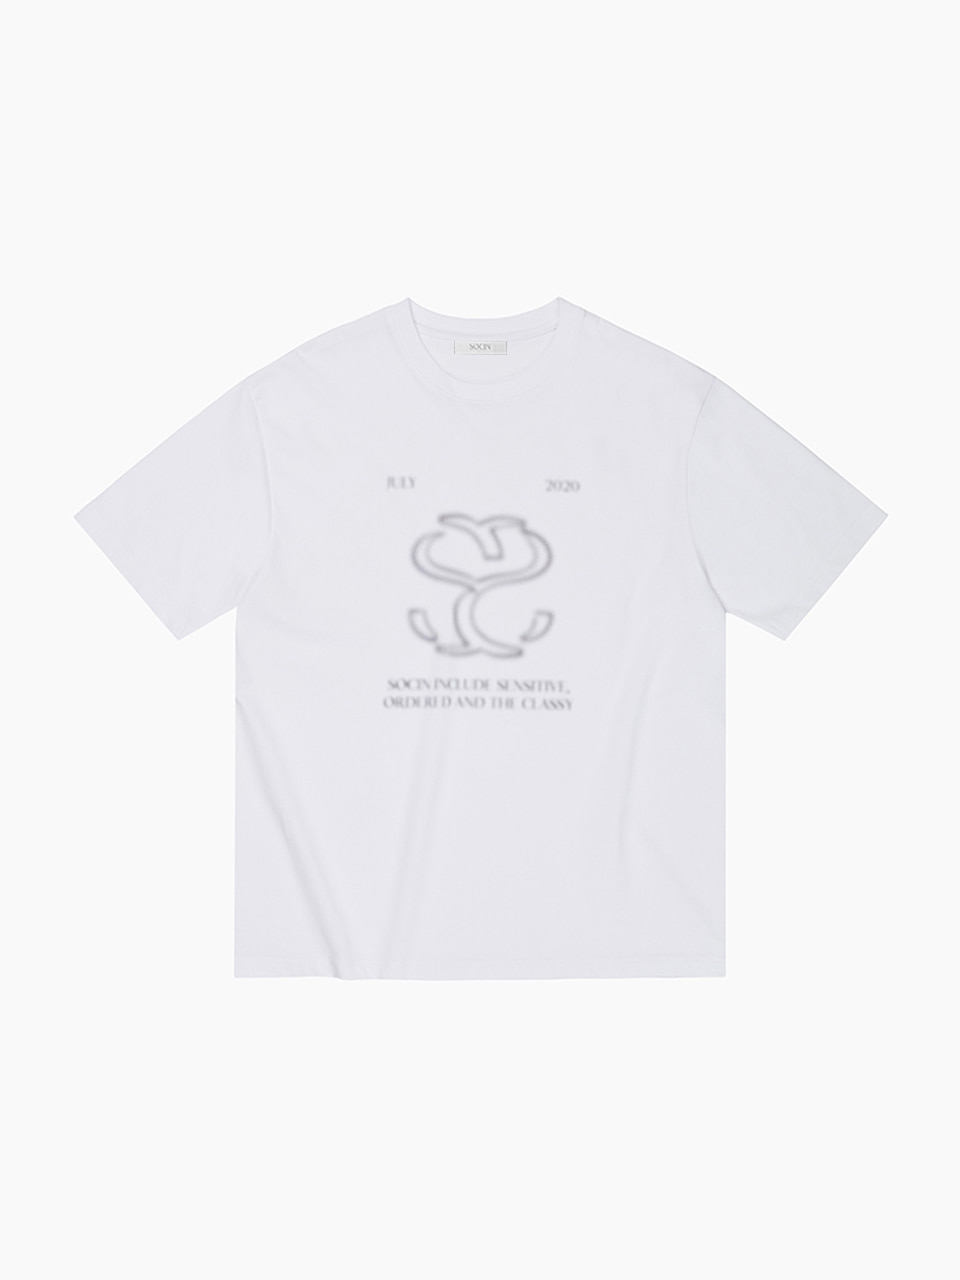 Blurred Logo Printed Half T-shirts (White)